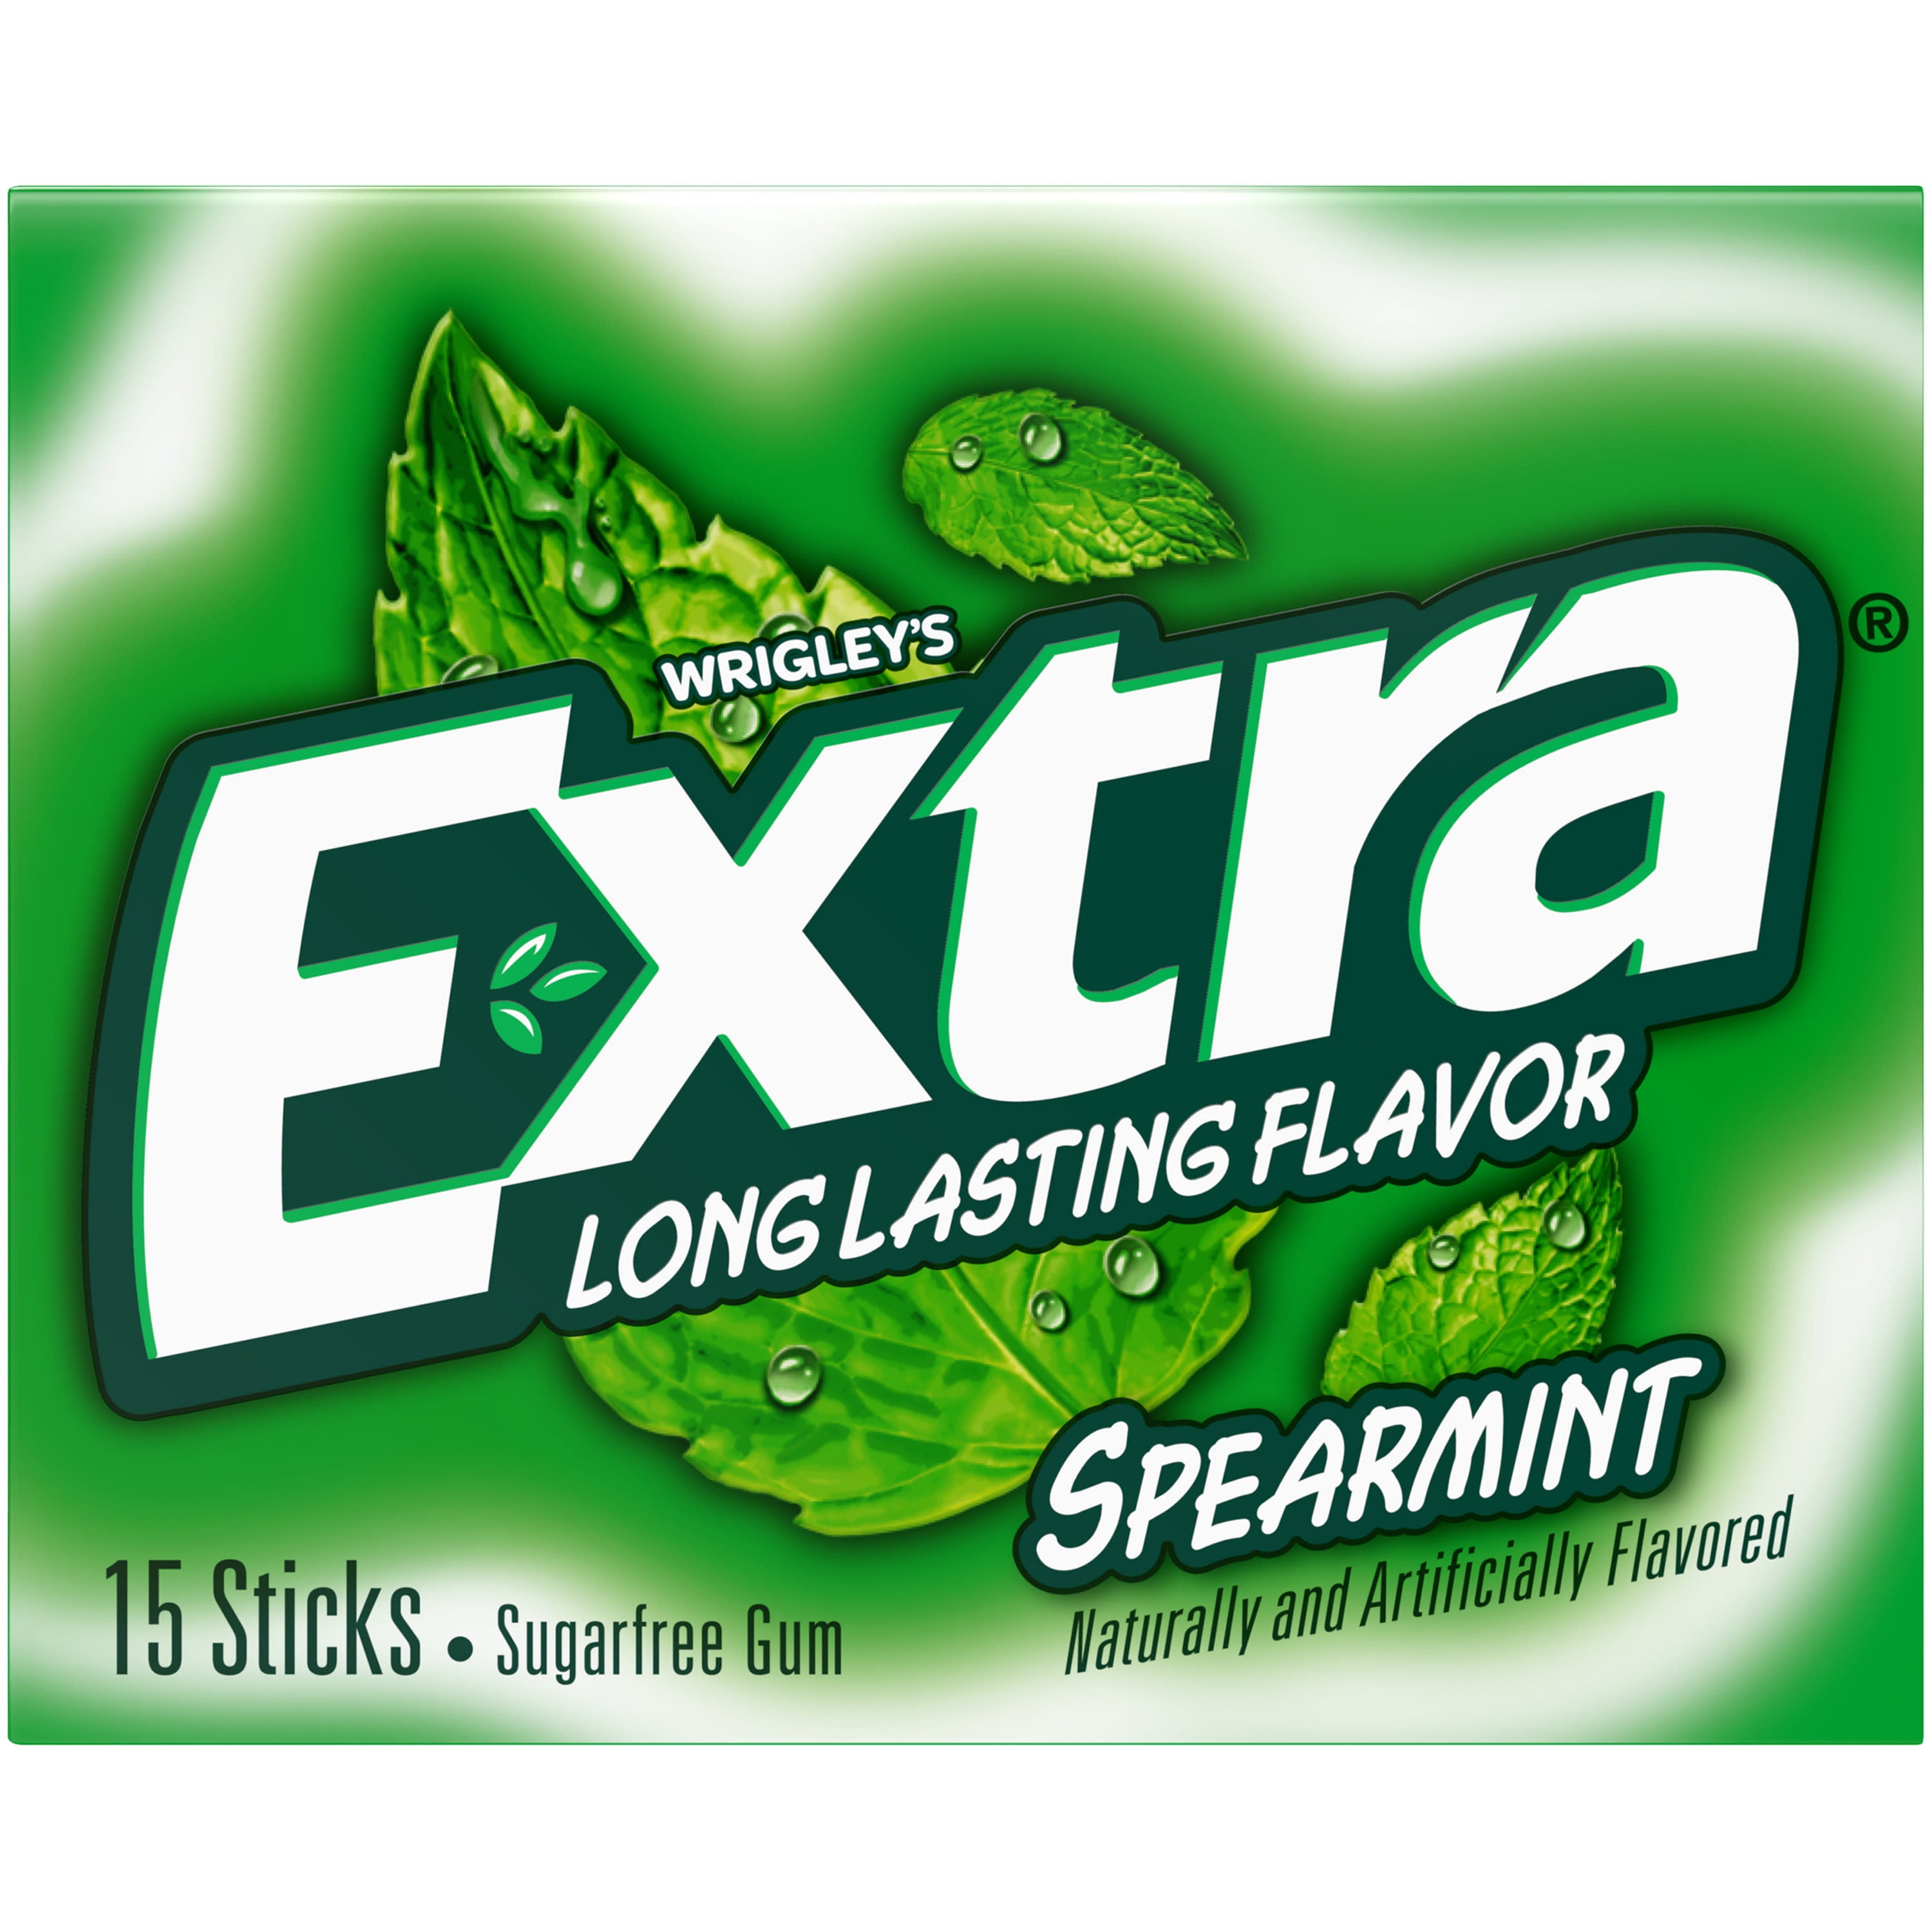 EXTRA Gum Cinnamon Sugarfree Chewing Gum, 15 Pieces (Pack of 10) 